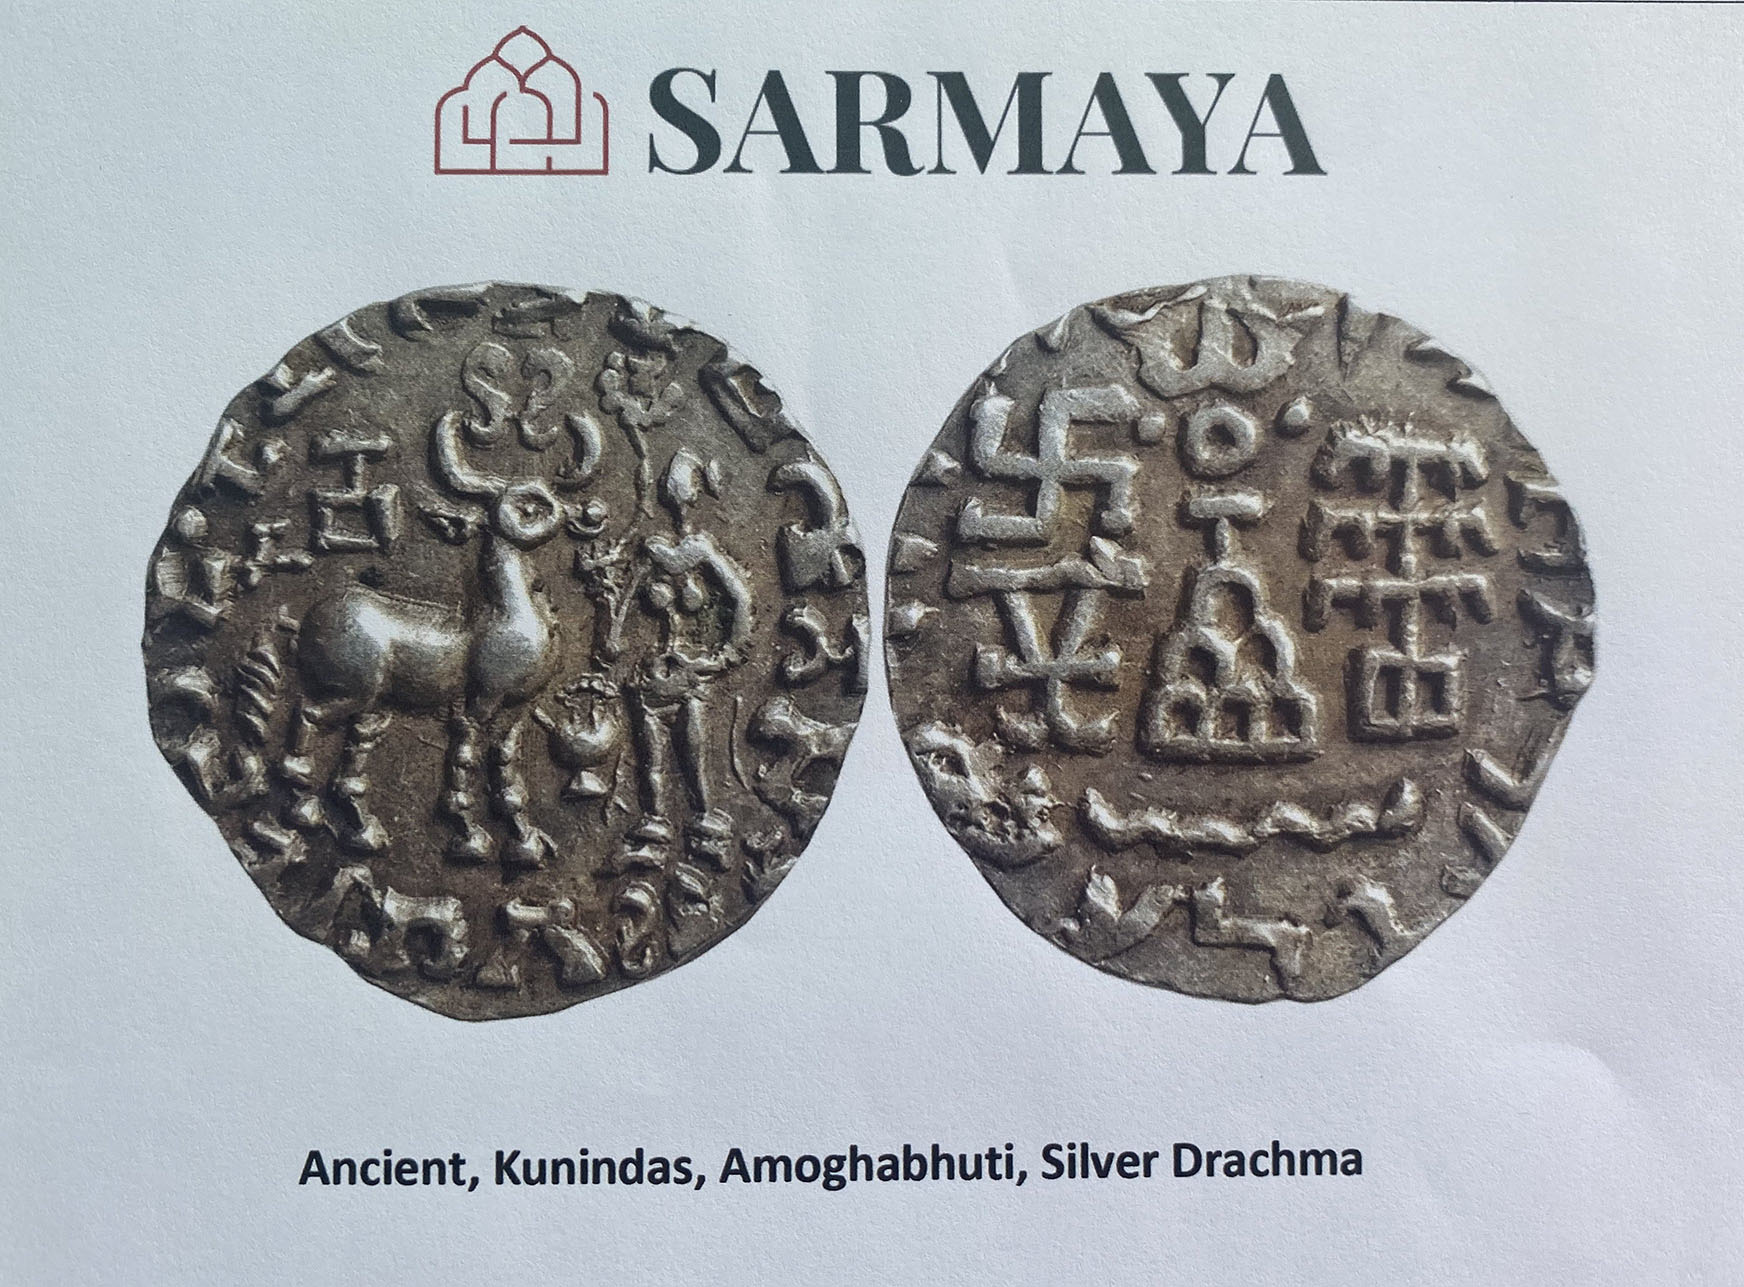 Coins of Ancient India: A Sarmaya roundup - Amir Munnabih I, Amirs of Multan, Amoghabhuti, Ancient India, featured, Gupta, Kumaragupta I, Kuninda, Lord Vishnu, Multan, Samudragupta, This Just In 2